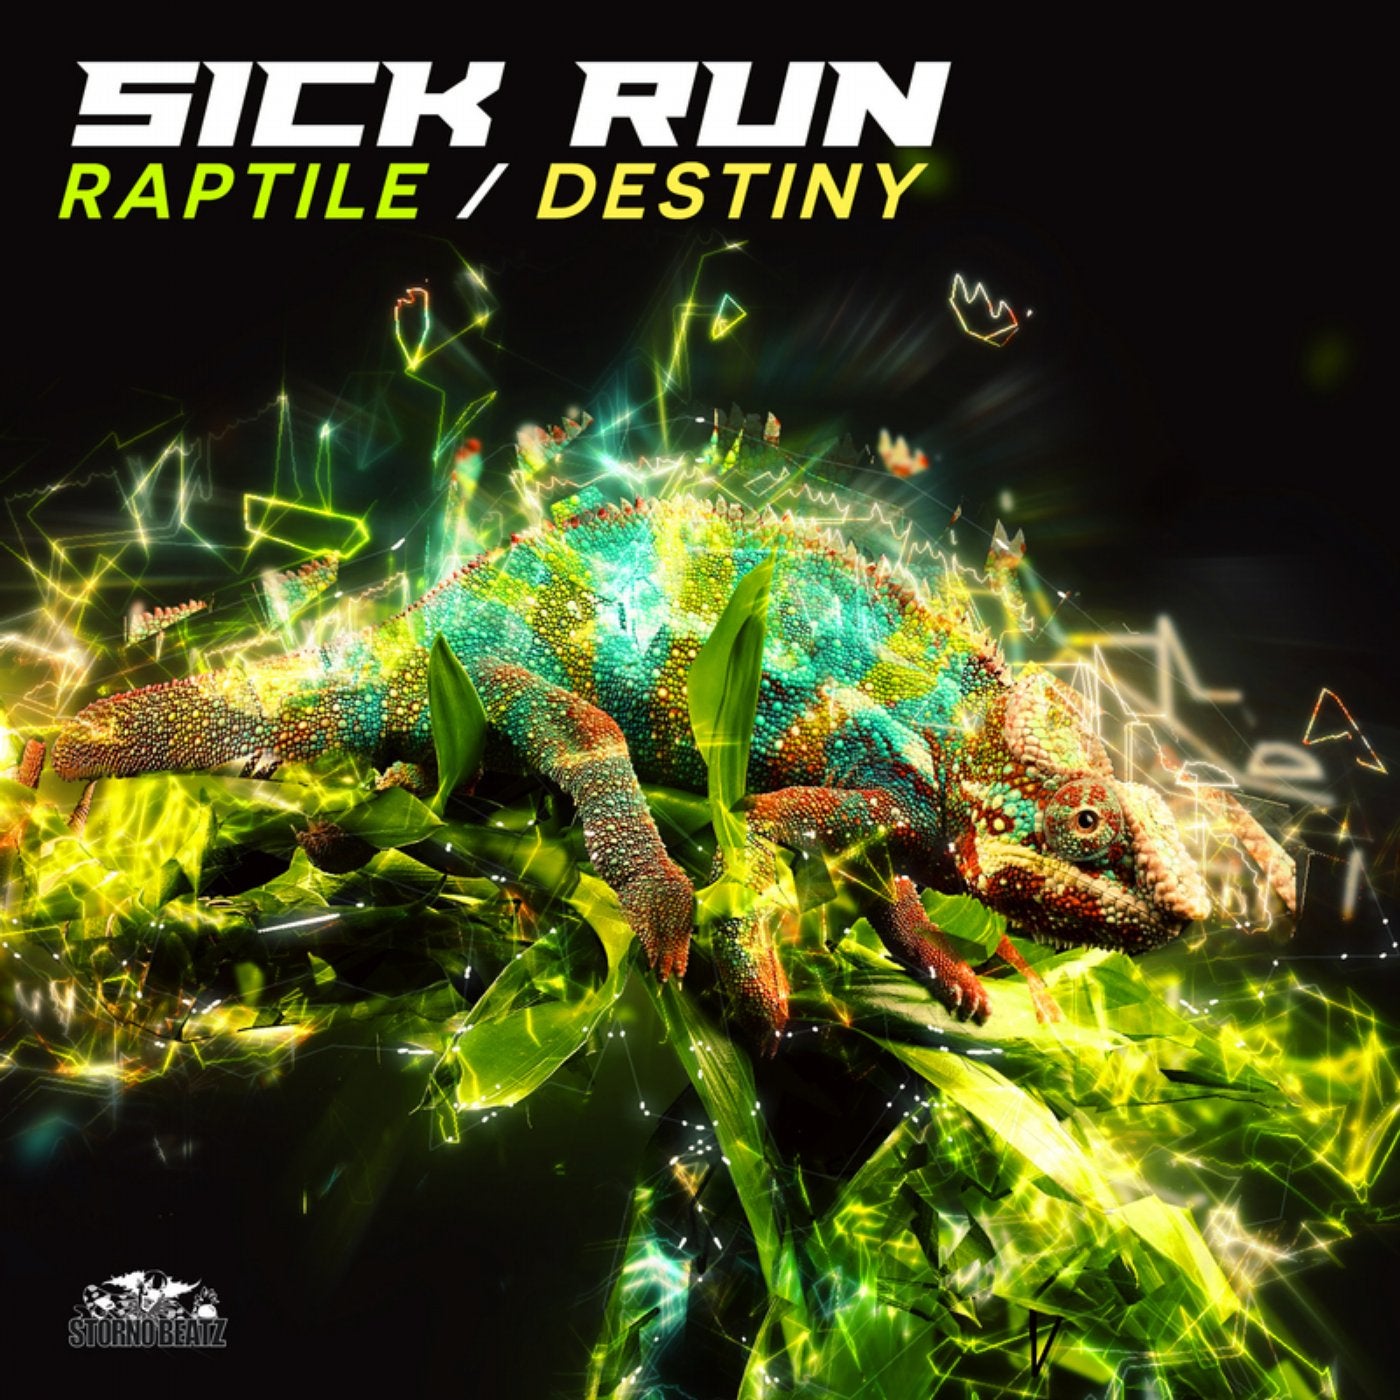 Raptile / Destiny